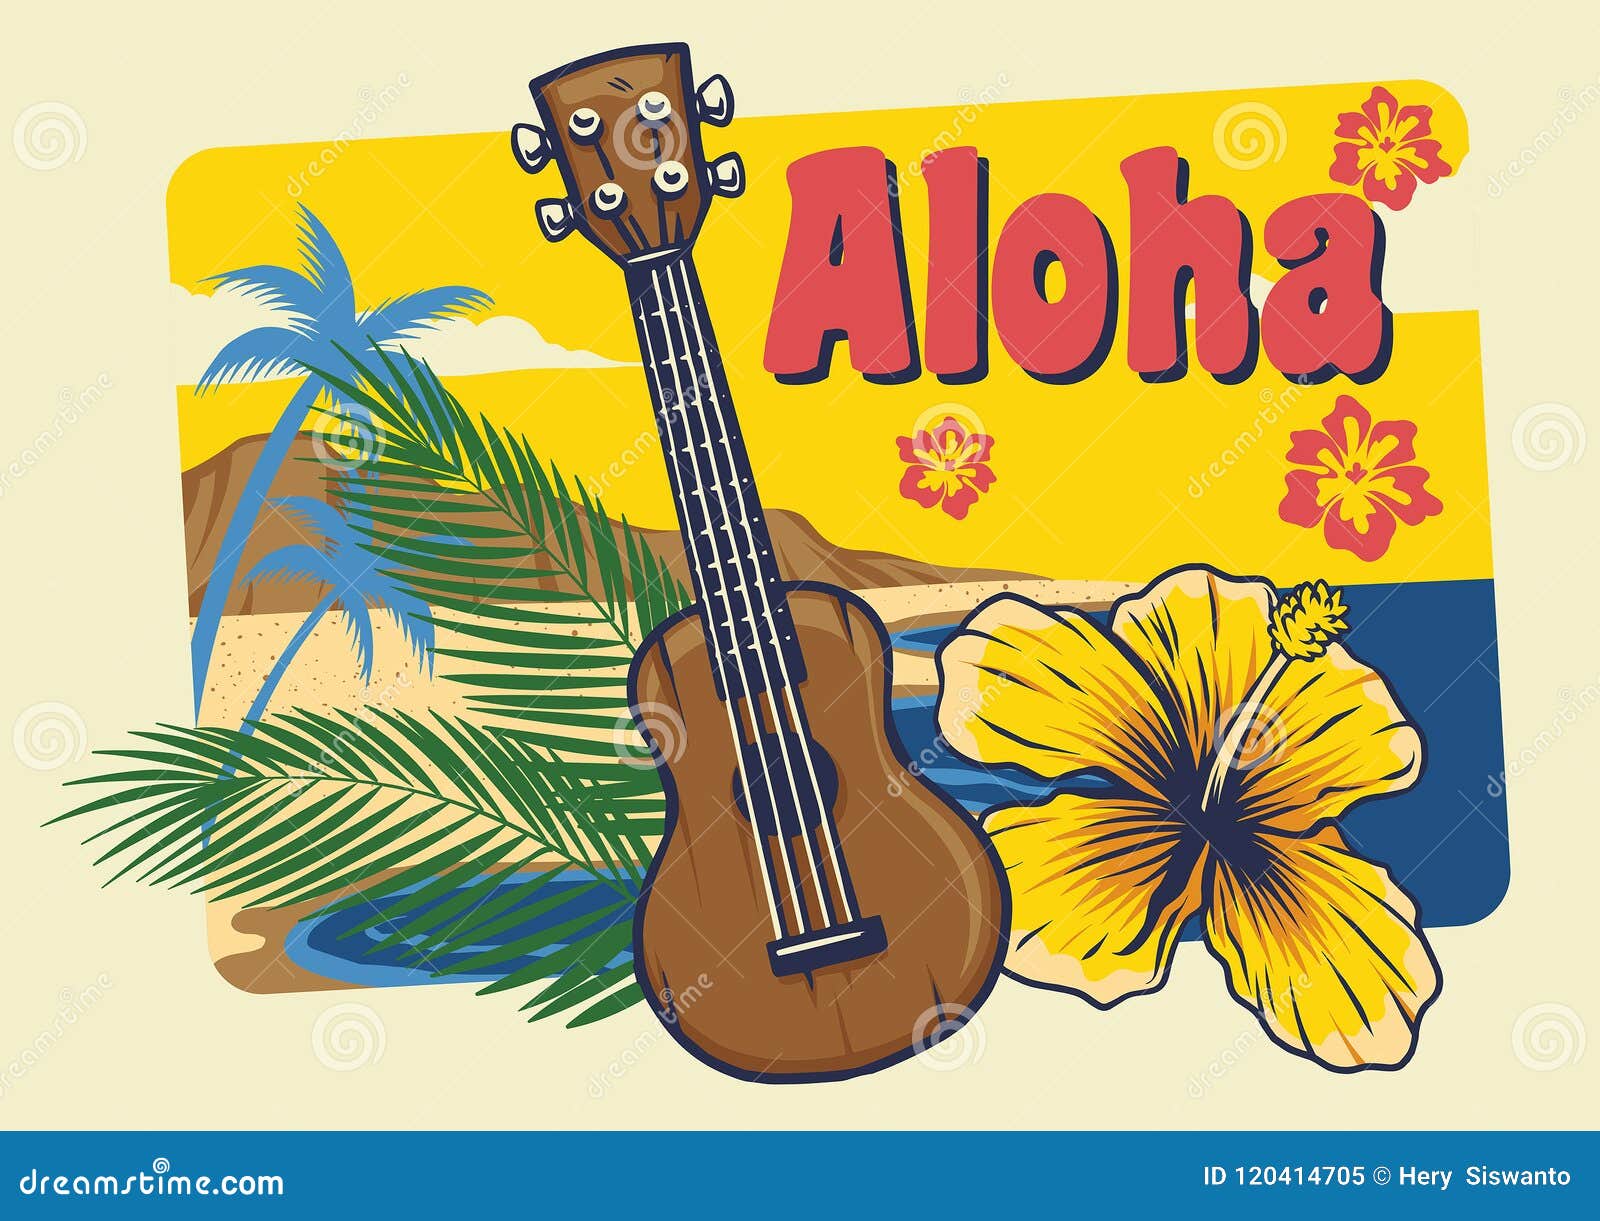 aloha hawaii ukulele in vintage style